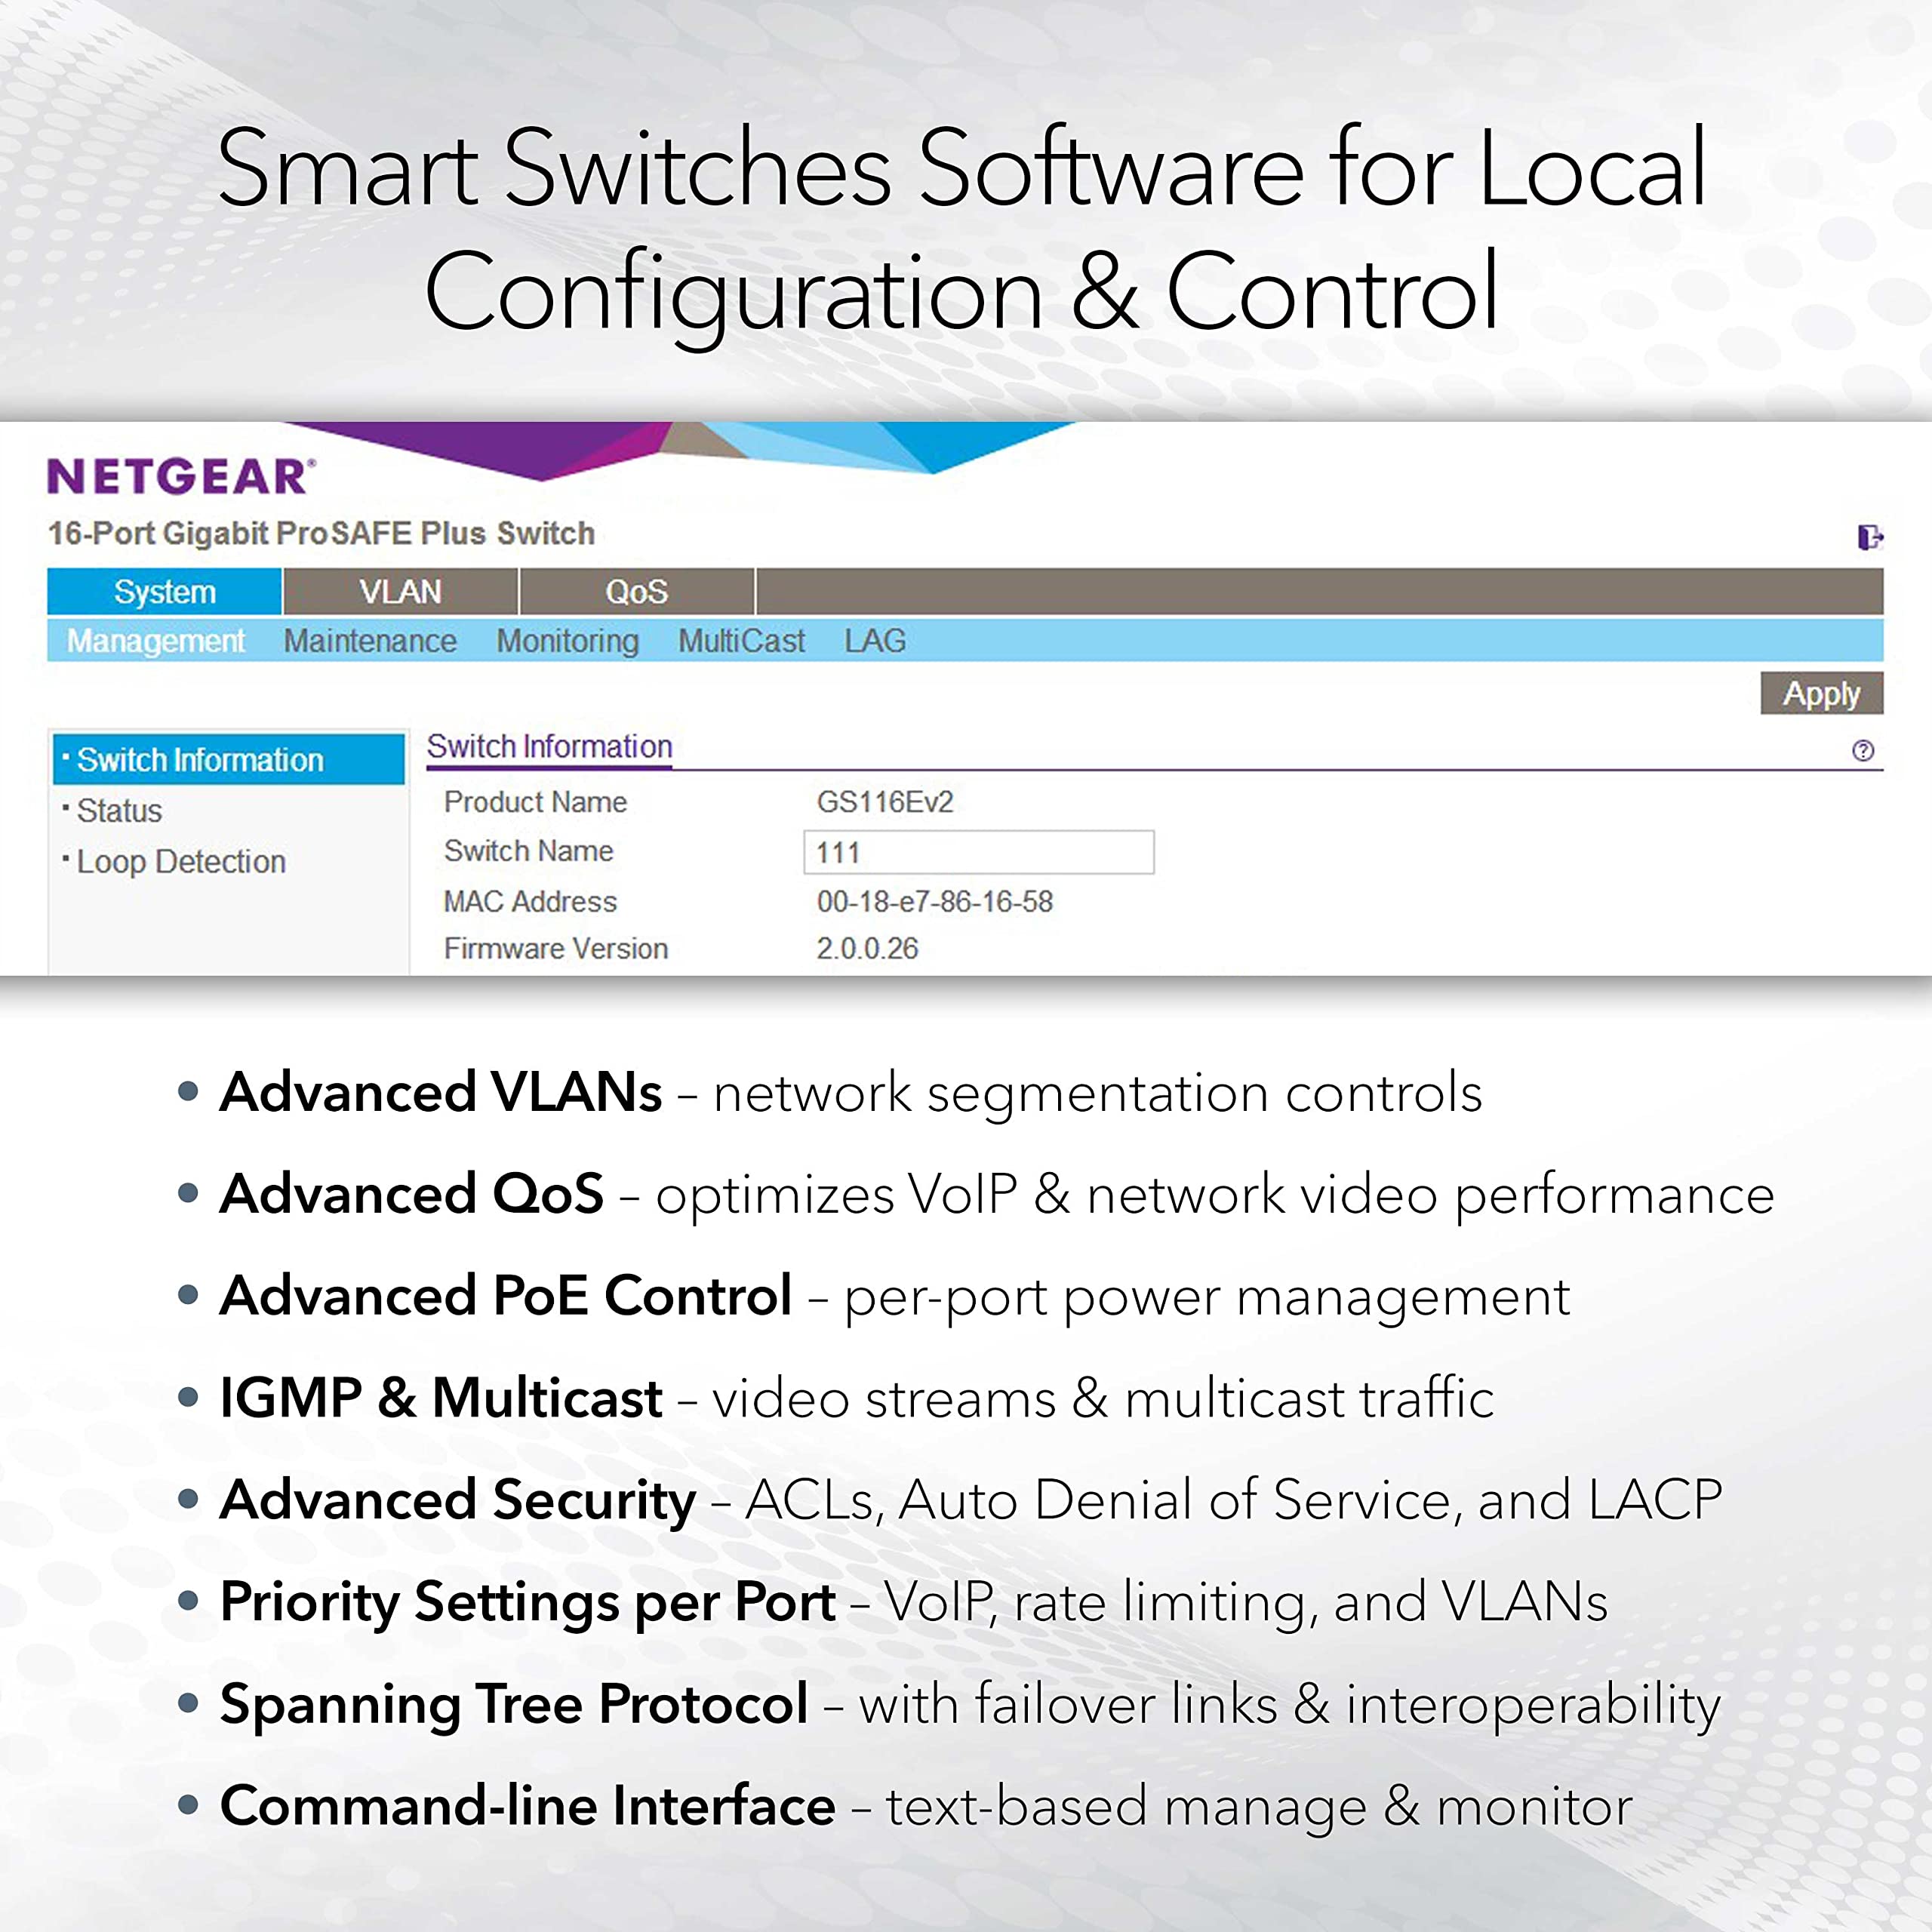 NETGEAR 28-Port PoE Gigabit Ethernet Smart Switch (GS728TPP) - Managed, Optional Insight Cloud Management, 24 x PoE+ @ 380W, 4 x 1G SFP, Desktop or Rackmount, and Limited Lifetime Protection